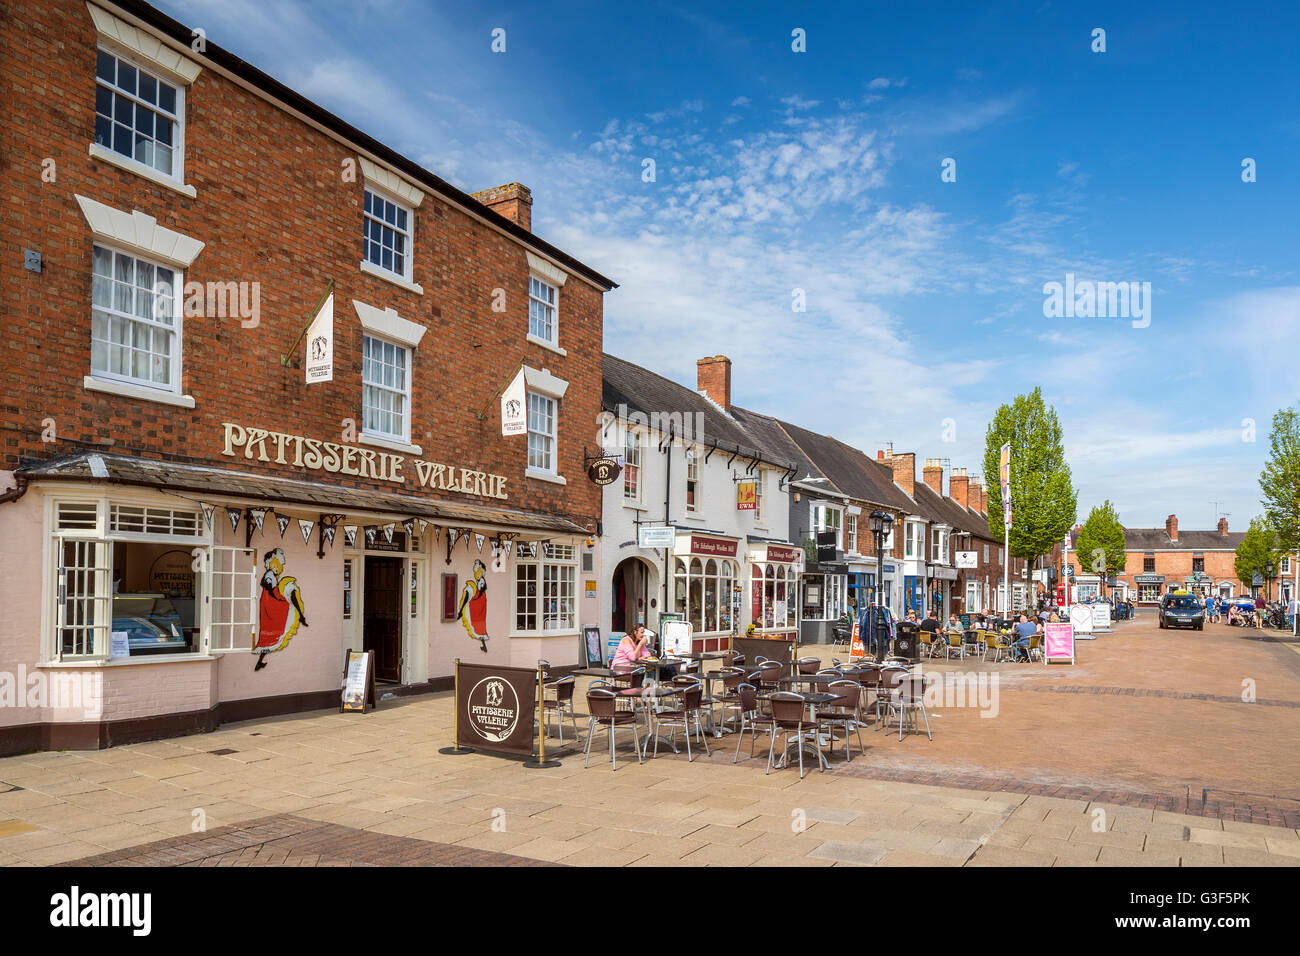 Henley Street à Stratford-upon-Avon, Warwickshire, Angleterre, Royaume-Uni, Europe. Banque D'Images